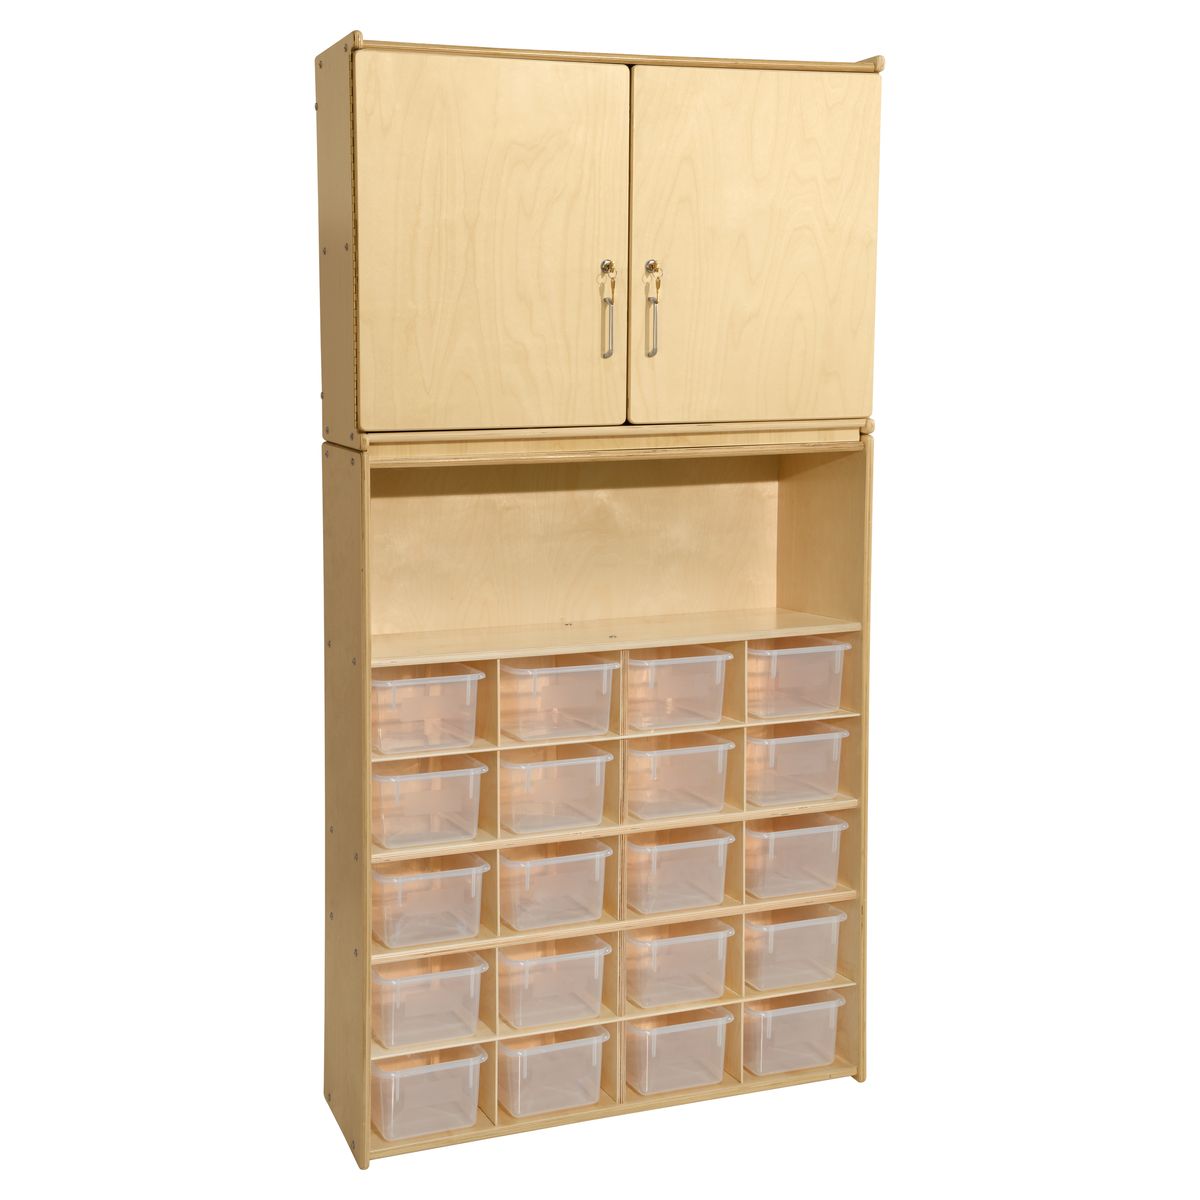 C56201-36w 20 Tray Cubby Storage Locker & Cabinet With Translucent Bins - Rta